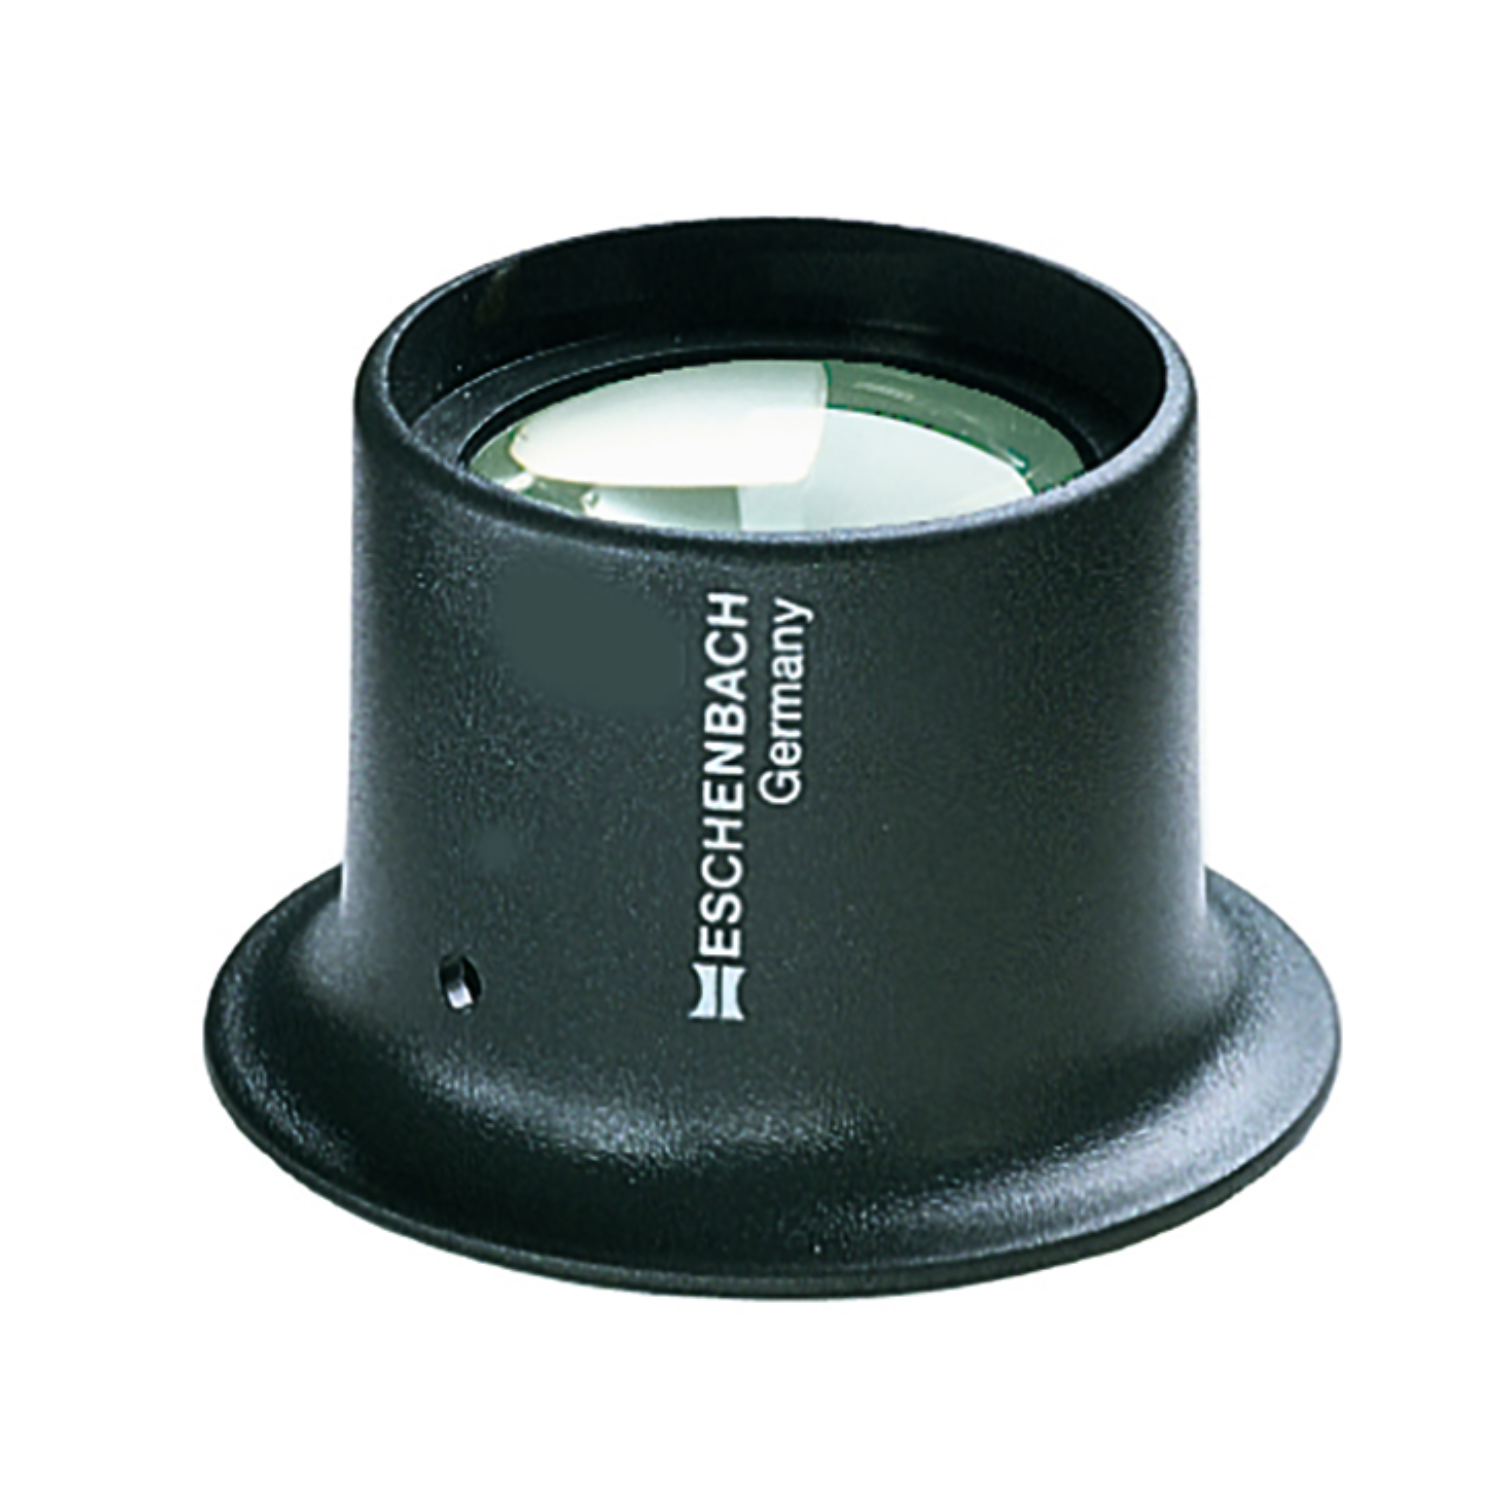 Image of Eschenbach's 0.9" professional grade loupe magnifier